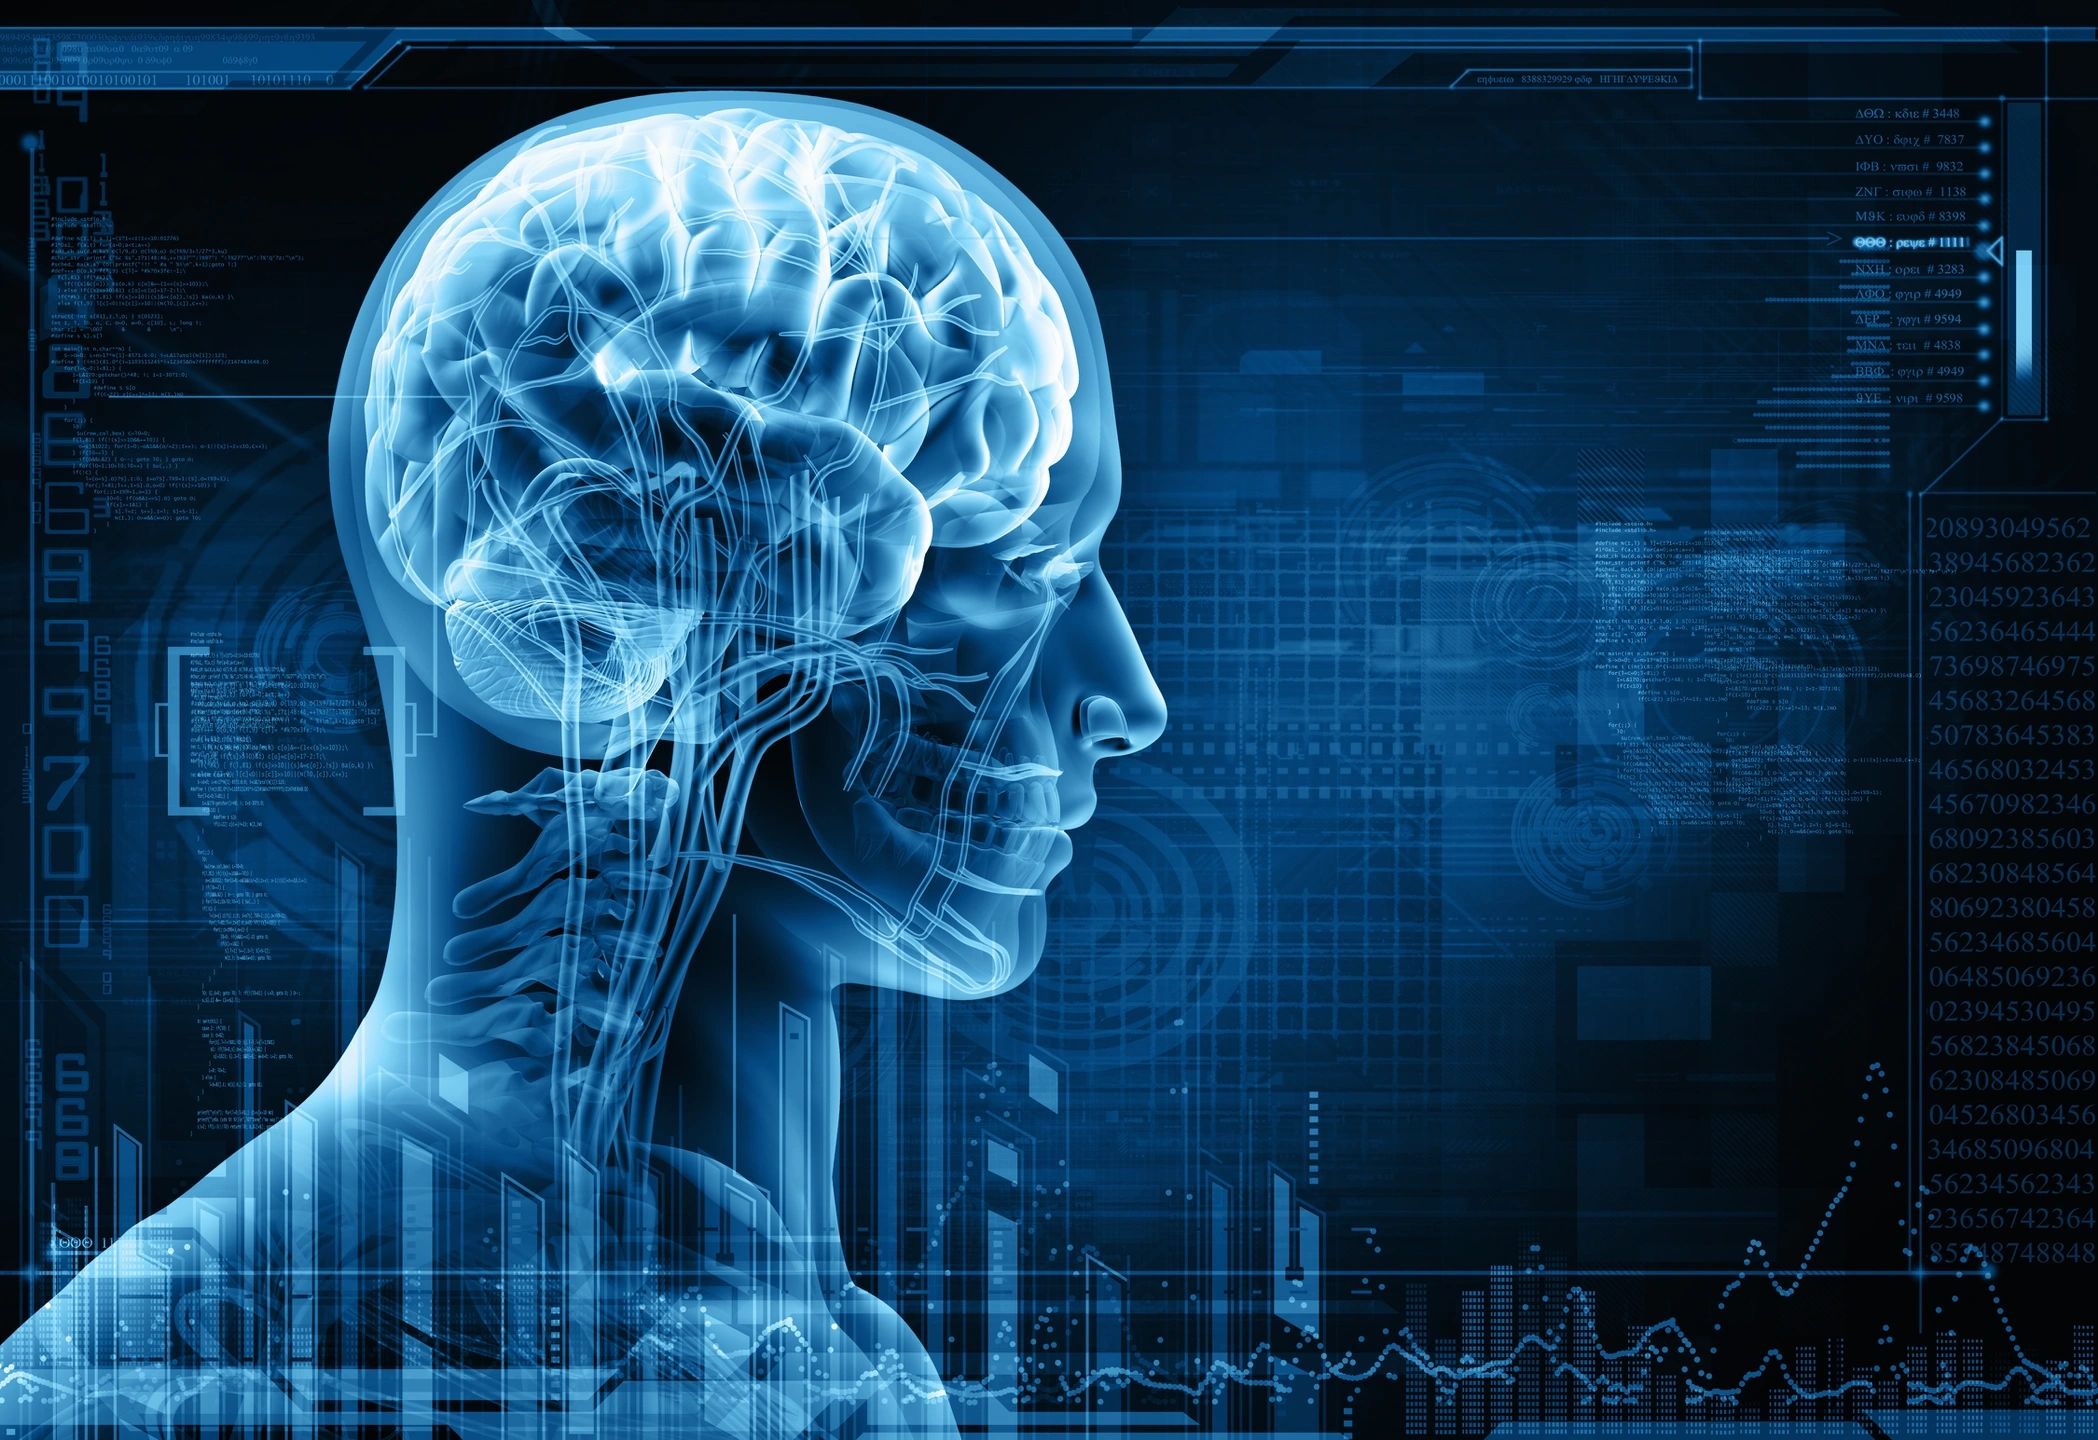 chiro chiropactor qca quad cities neurology neurologist Chris Beckwith Bettendorf IA brain image
